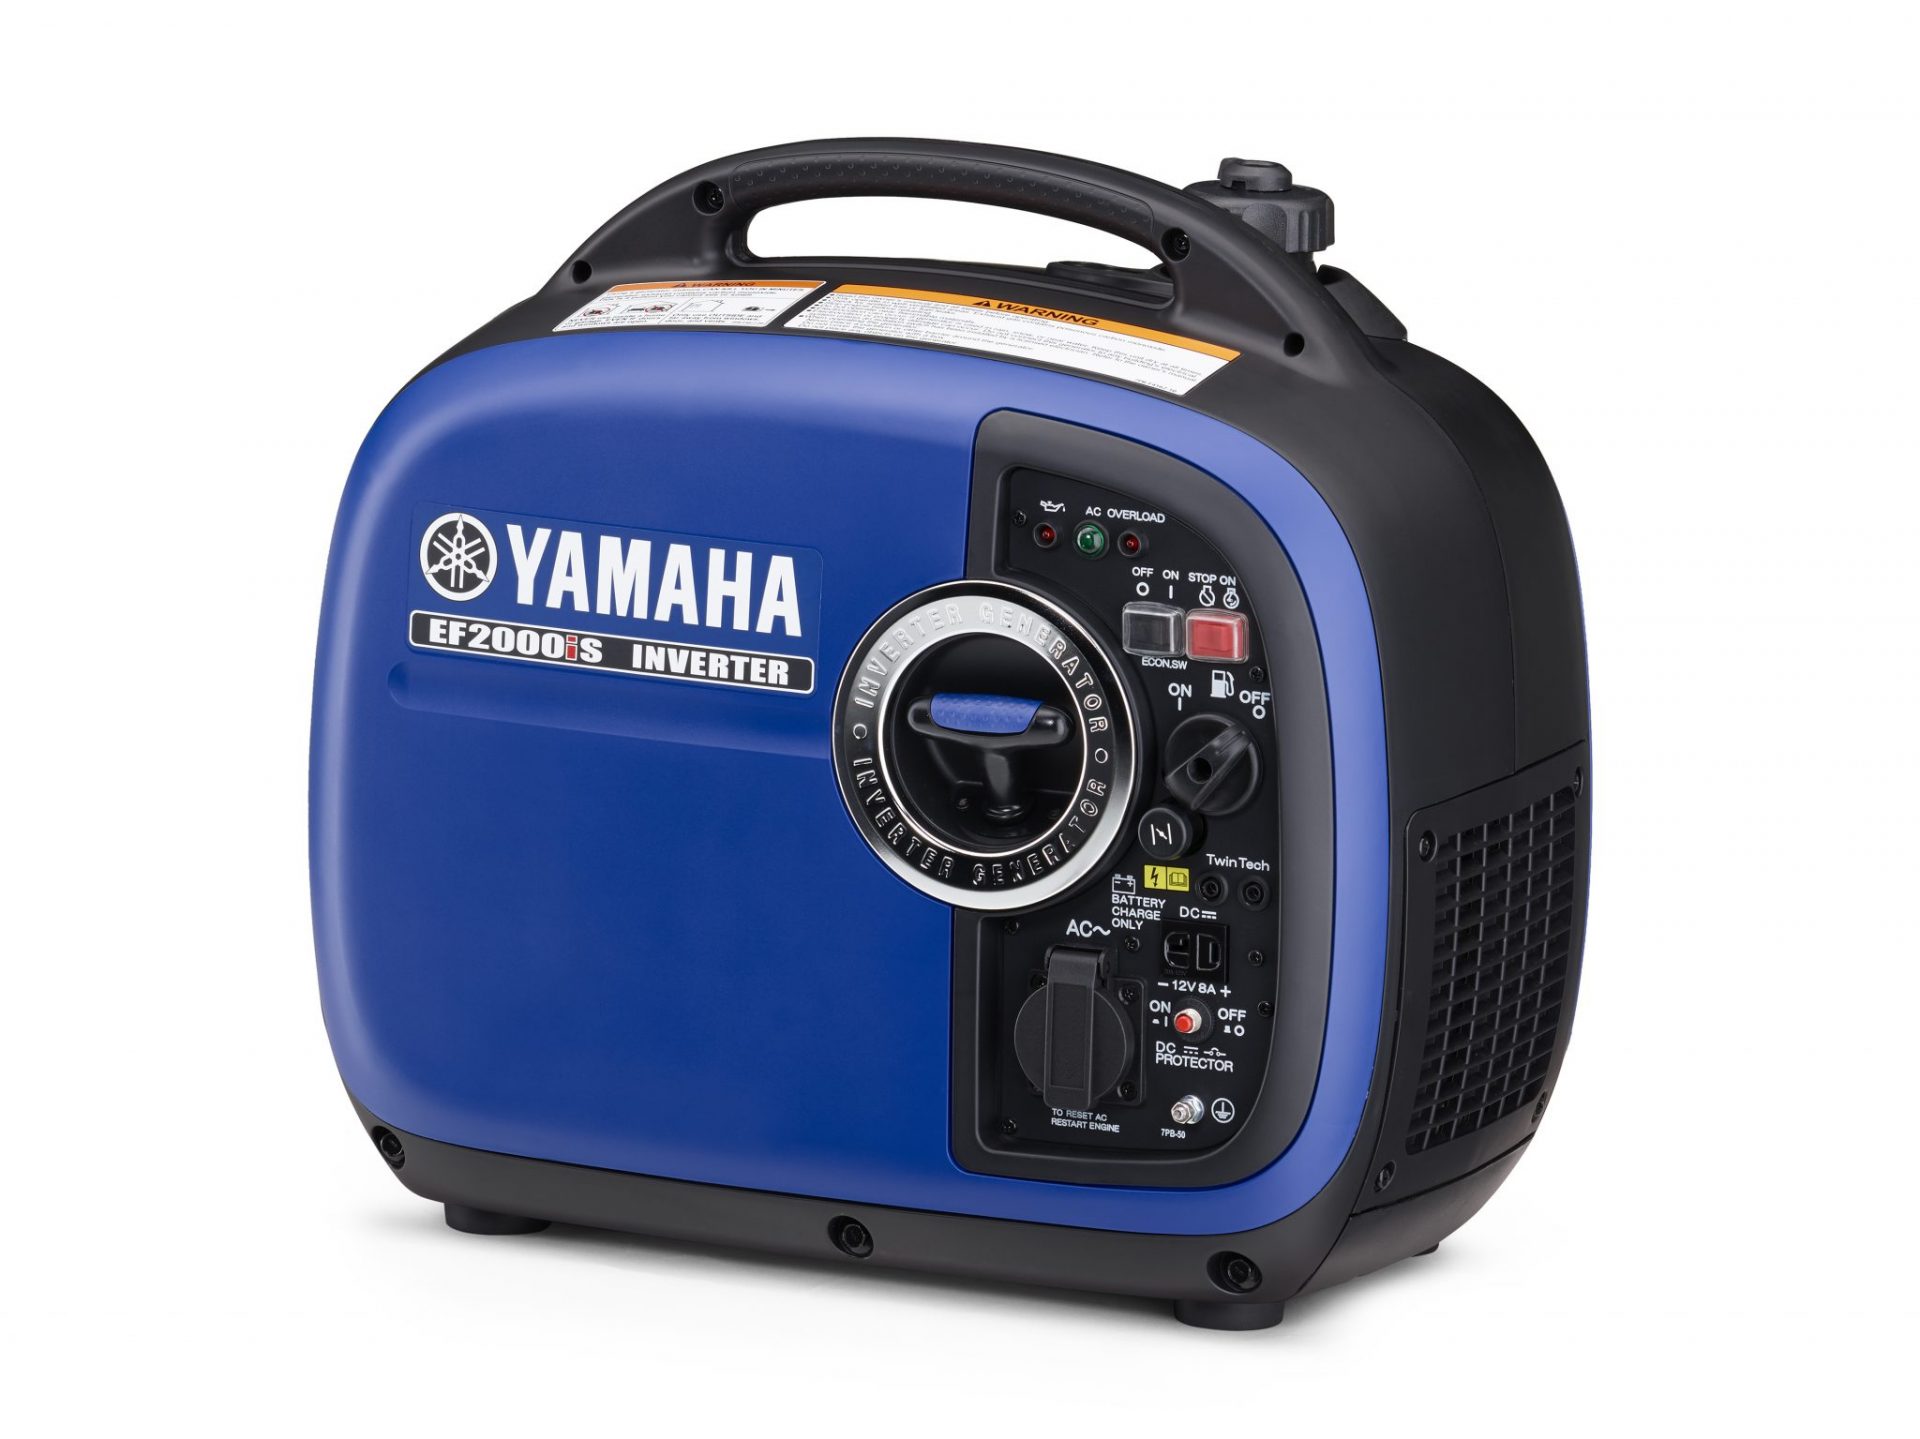 2. Yamaha 50 Amp Generator